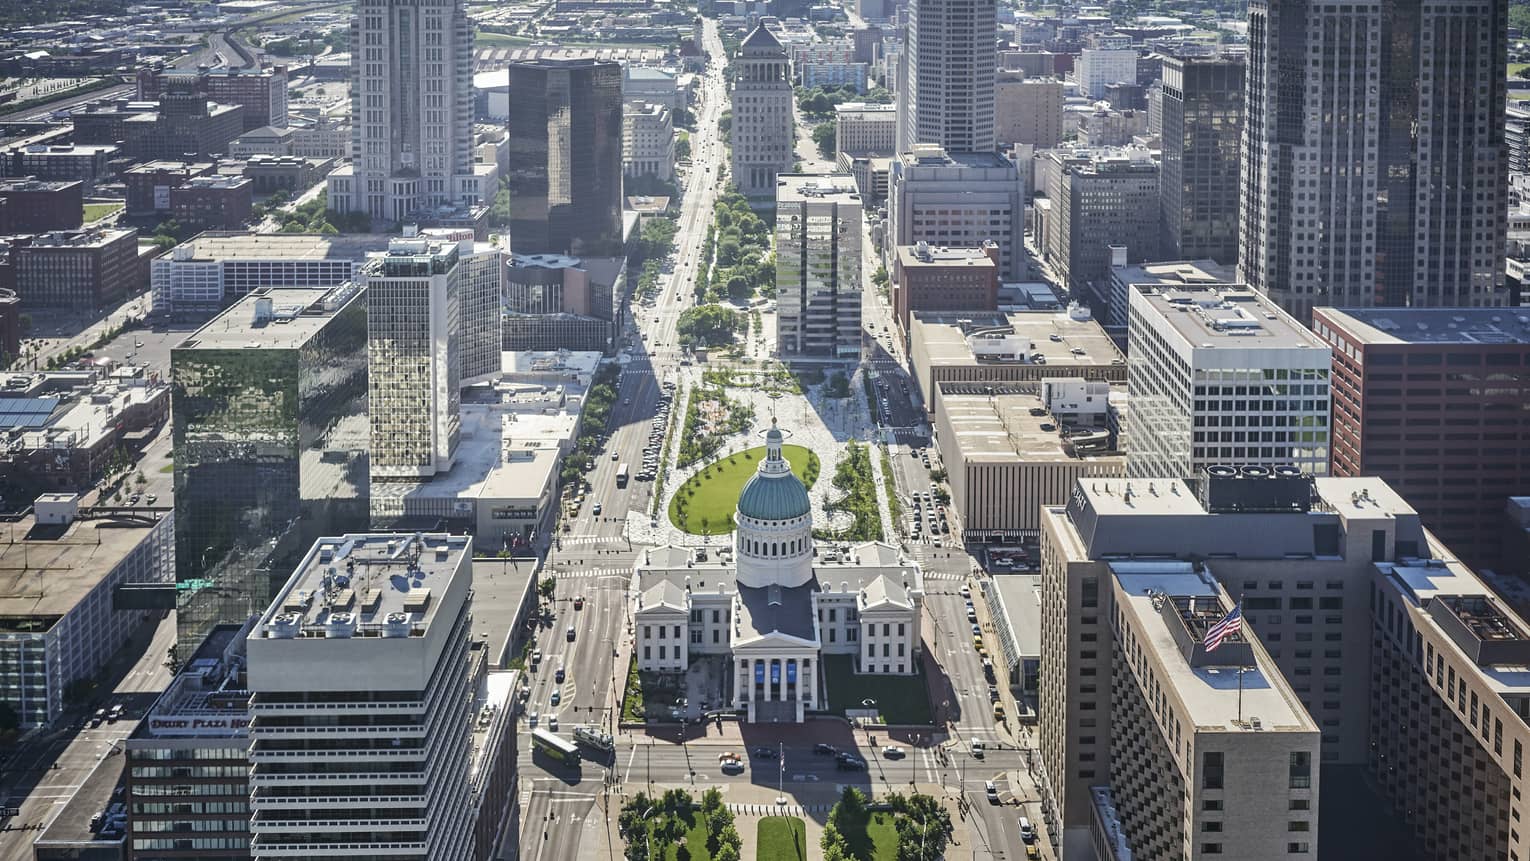 Aerial view of St. Louis city buildings, Kiener Plaza 